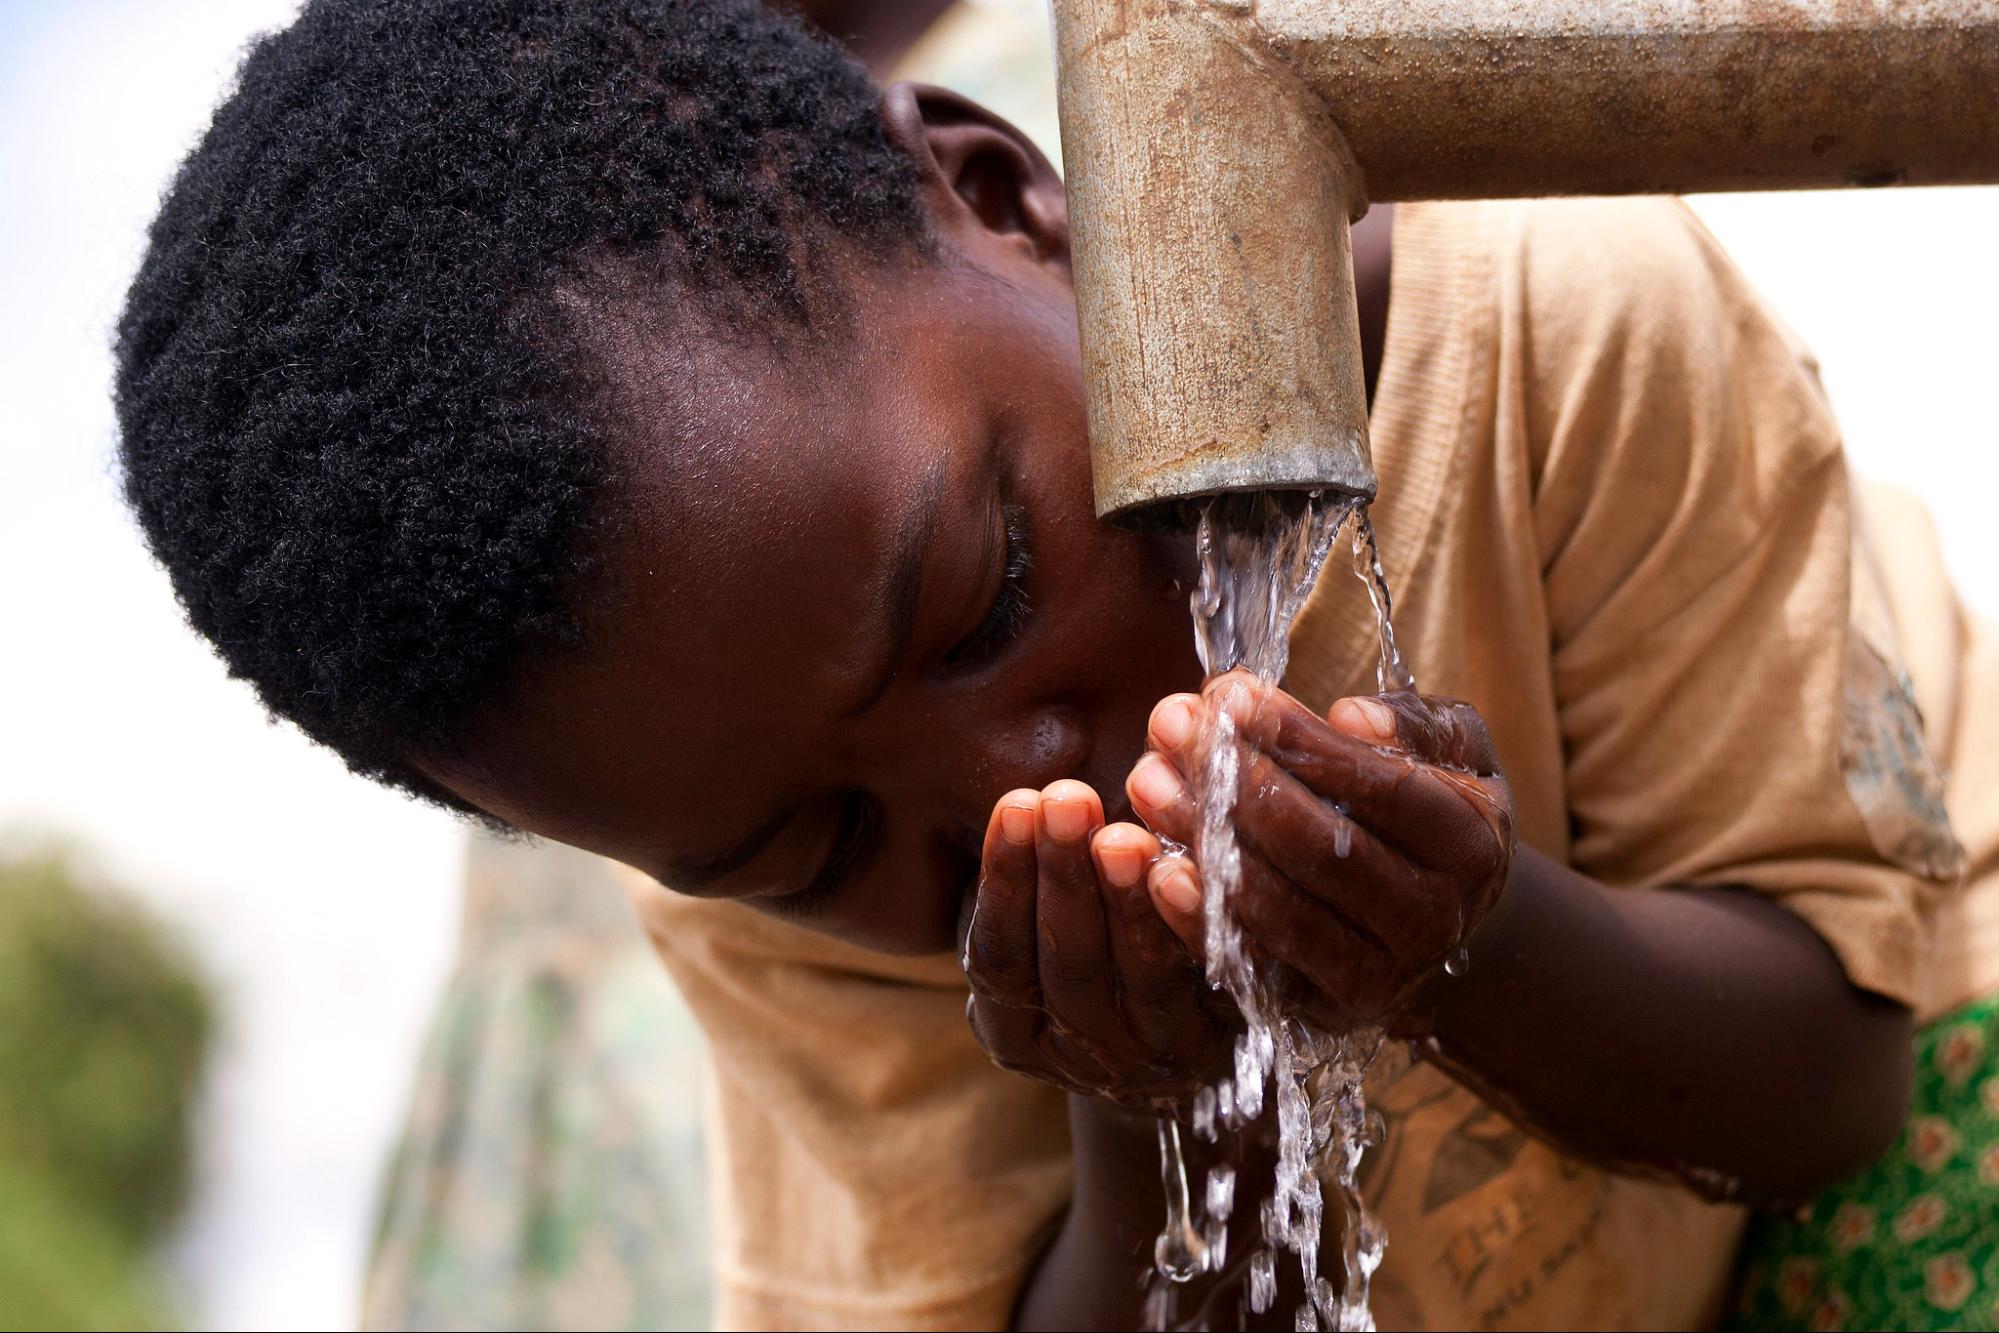 UN Warns Against ‘Vampiric’ Global Water Use